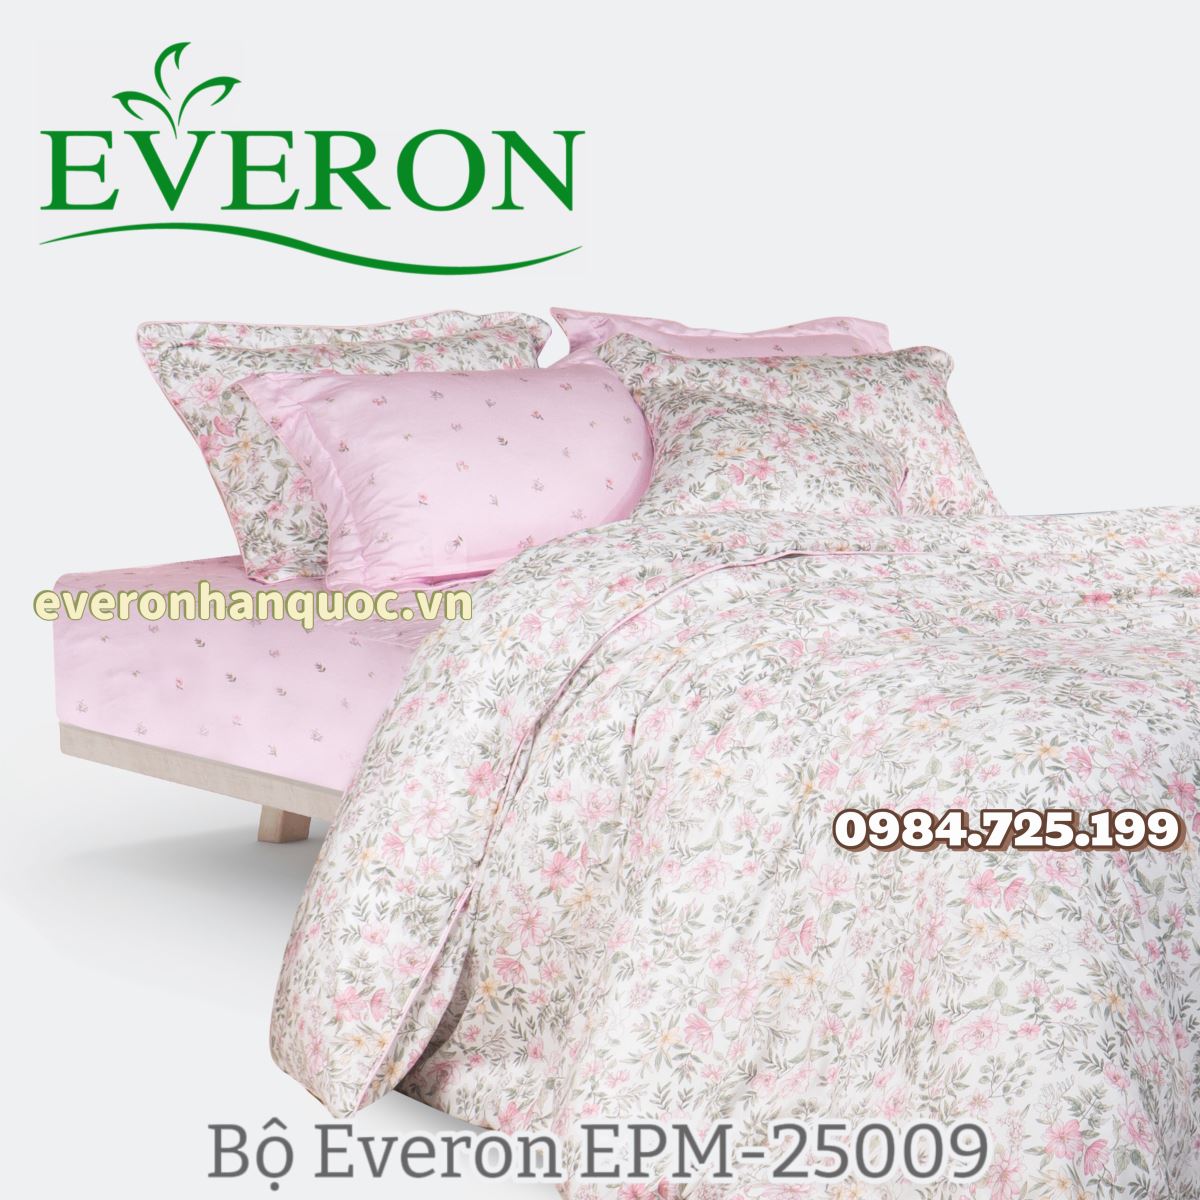 Bộ Everon EPM-25009